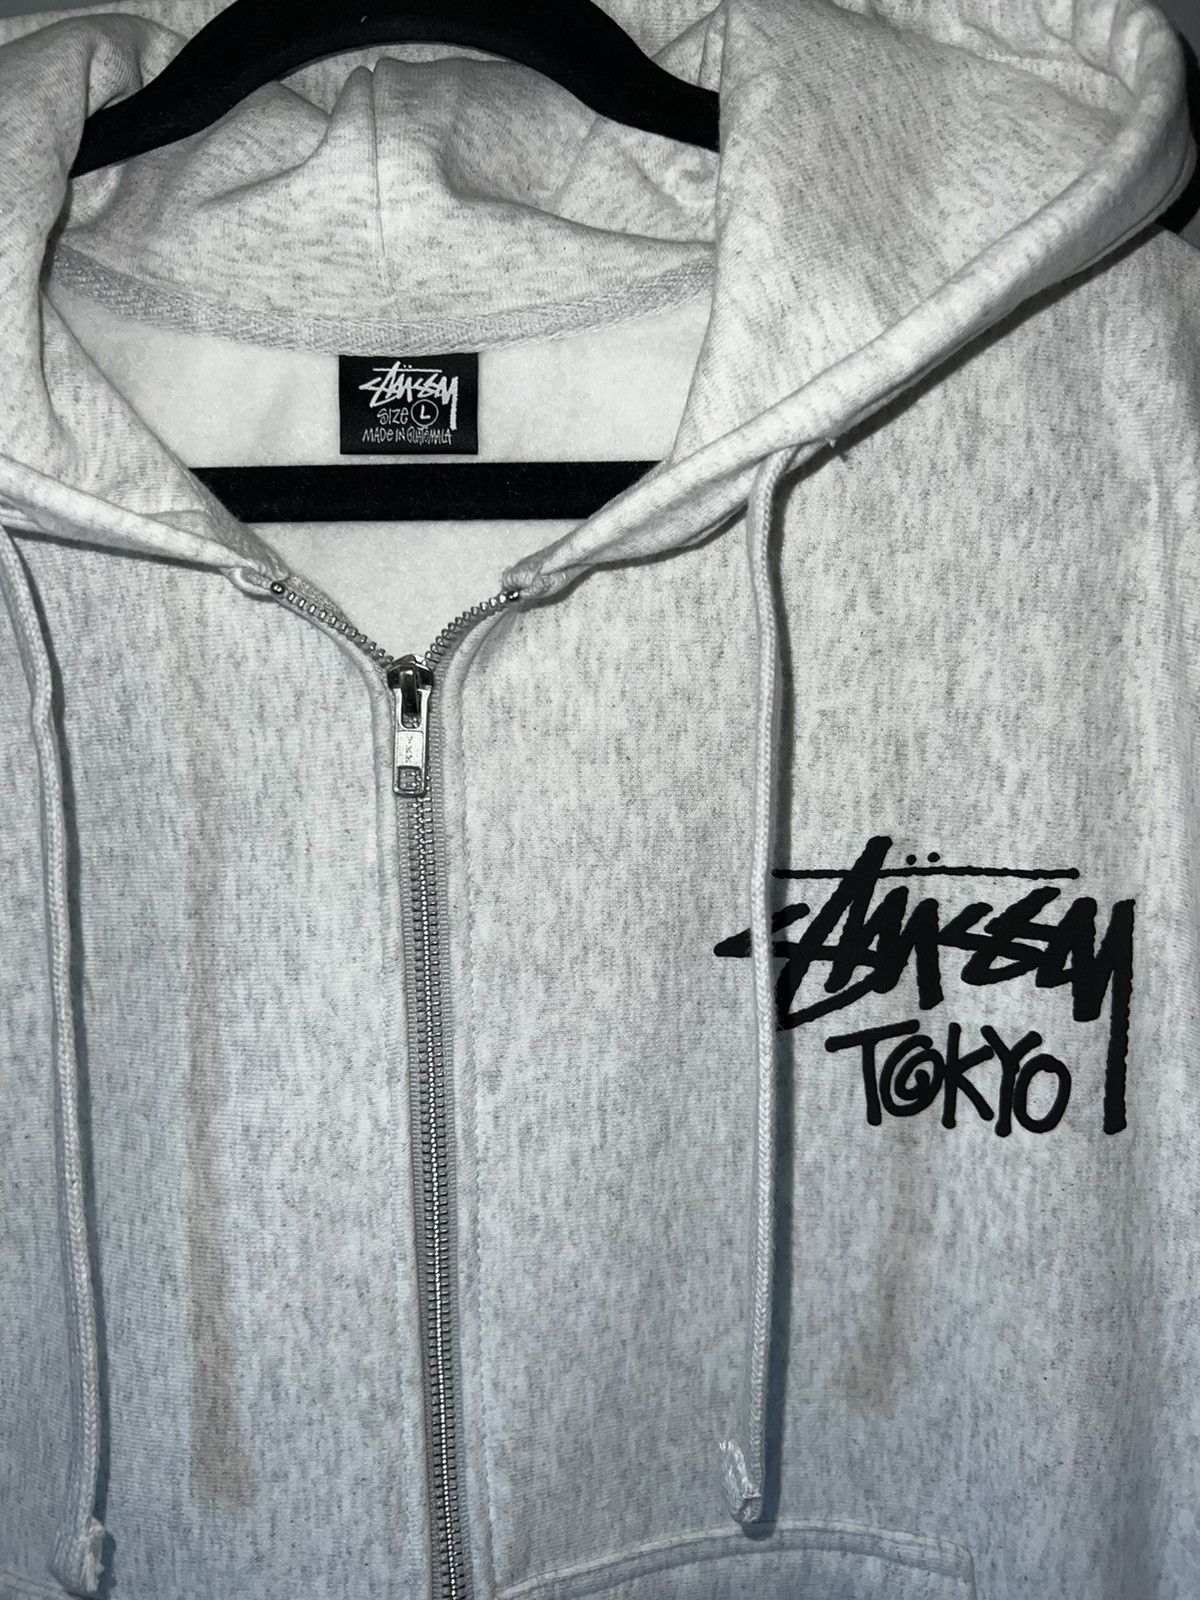 Stussy Grey Stussy Tokyo Zip Up Hoodie Size US L / EU 52-54 / 3 - 3 Thumbnail